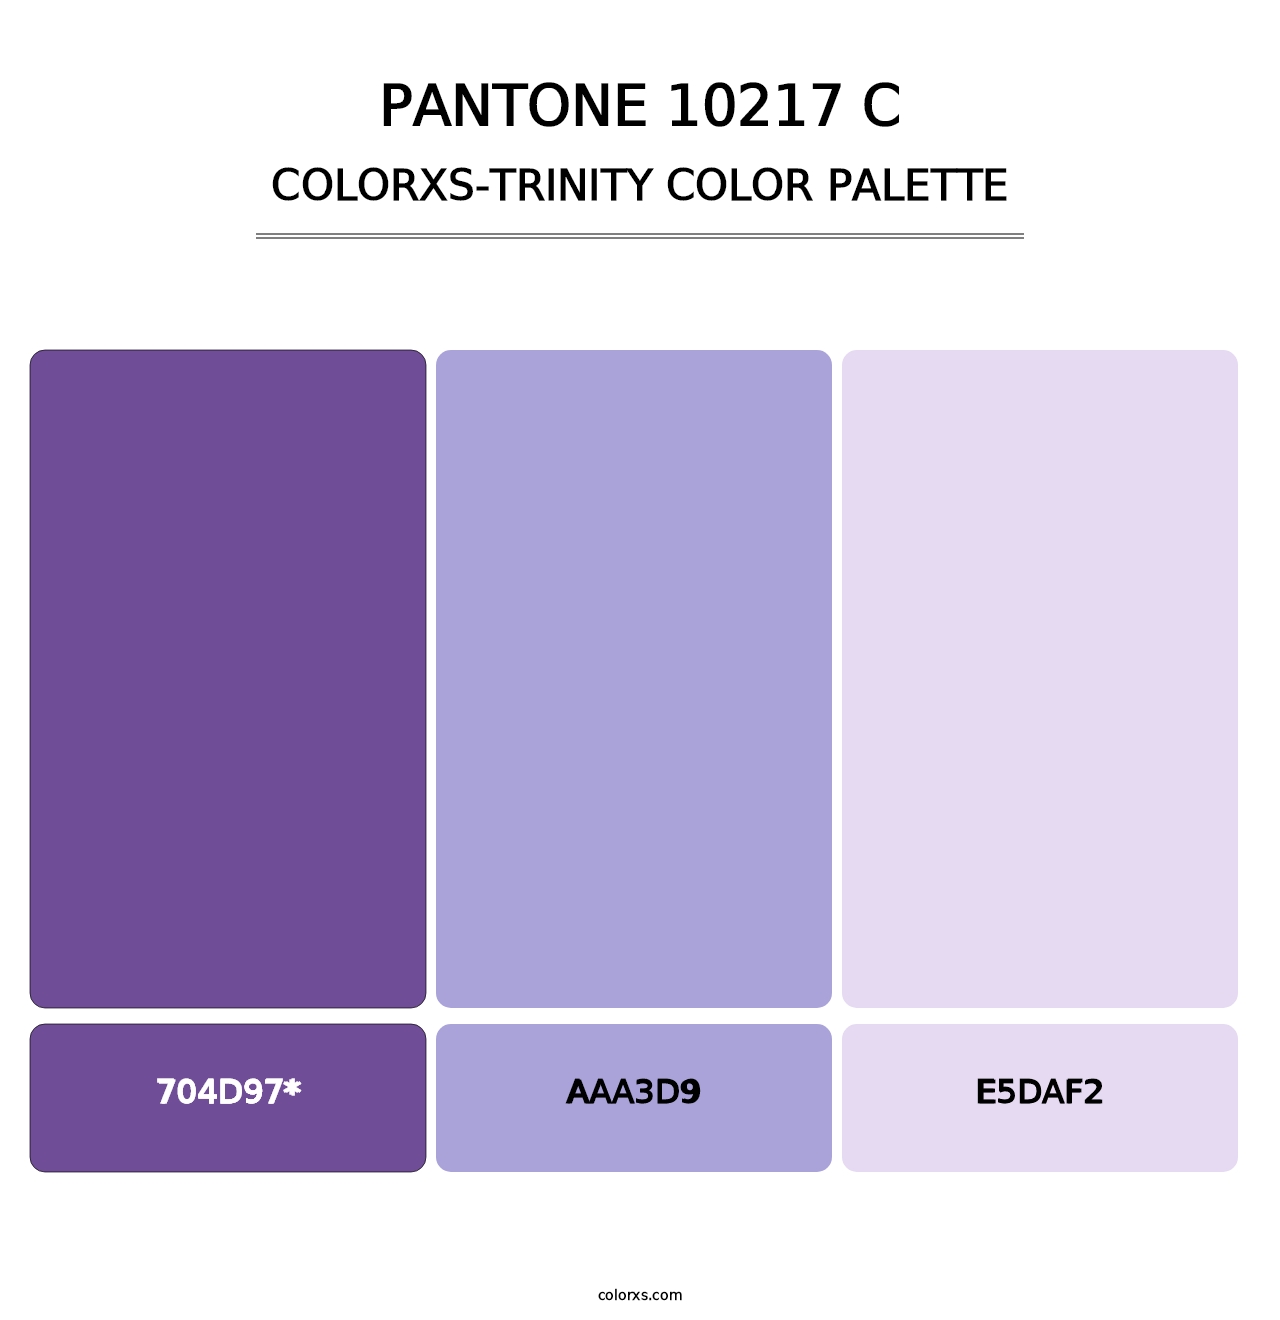 PANTONE 10217 C - Colorxs Trinity Palette